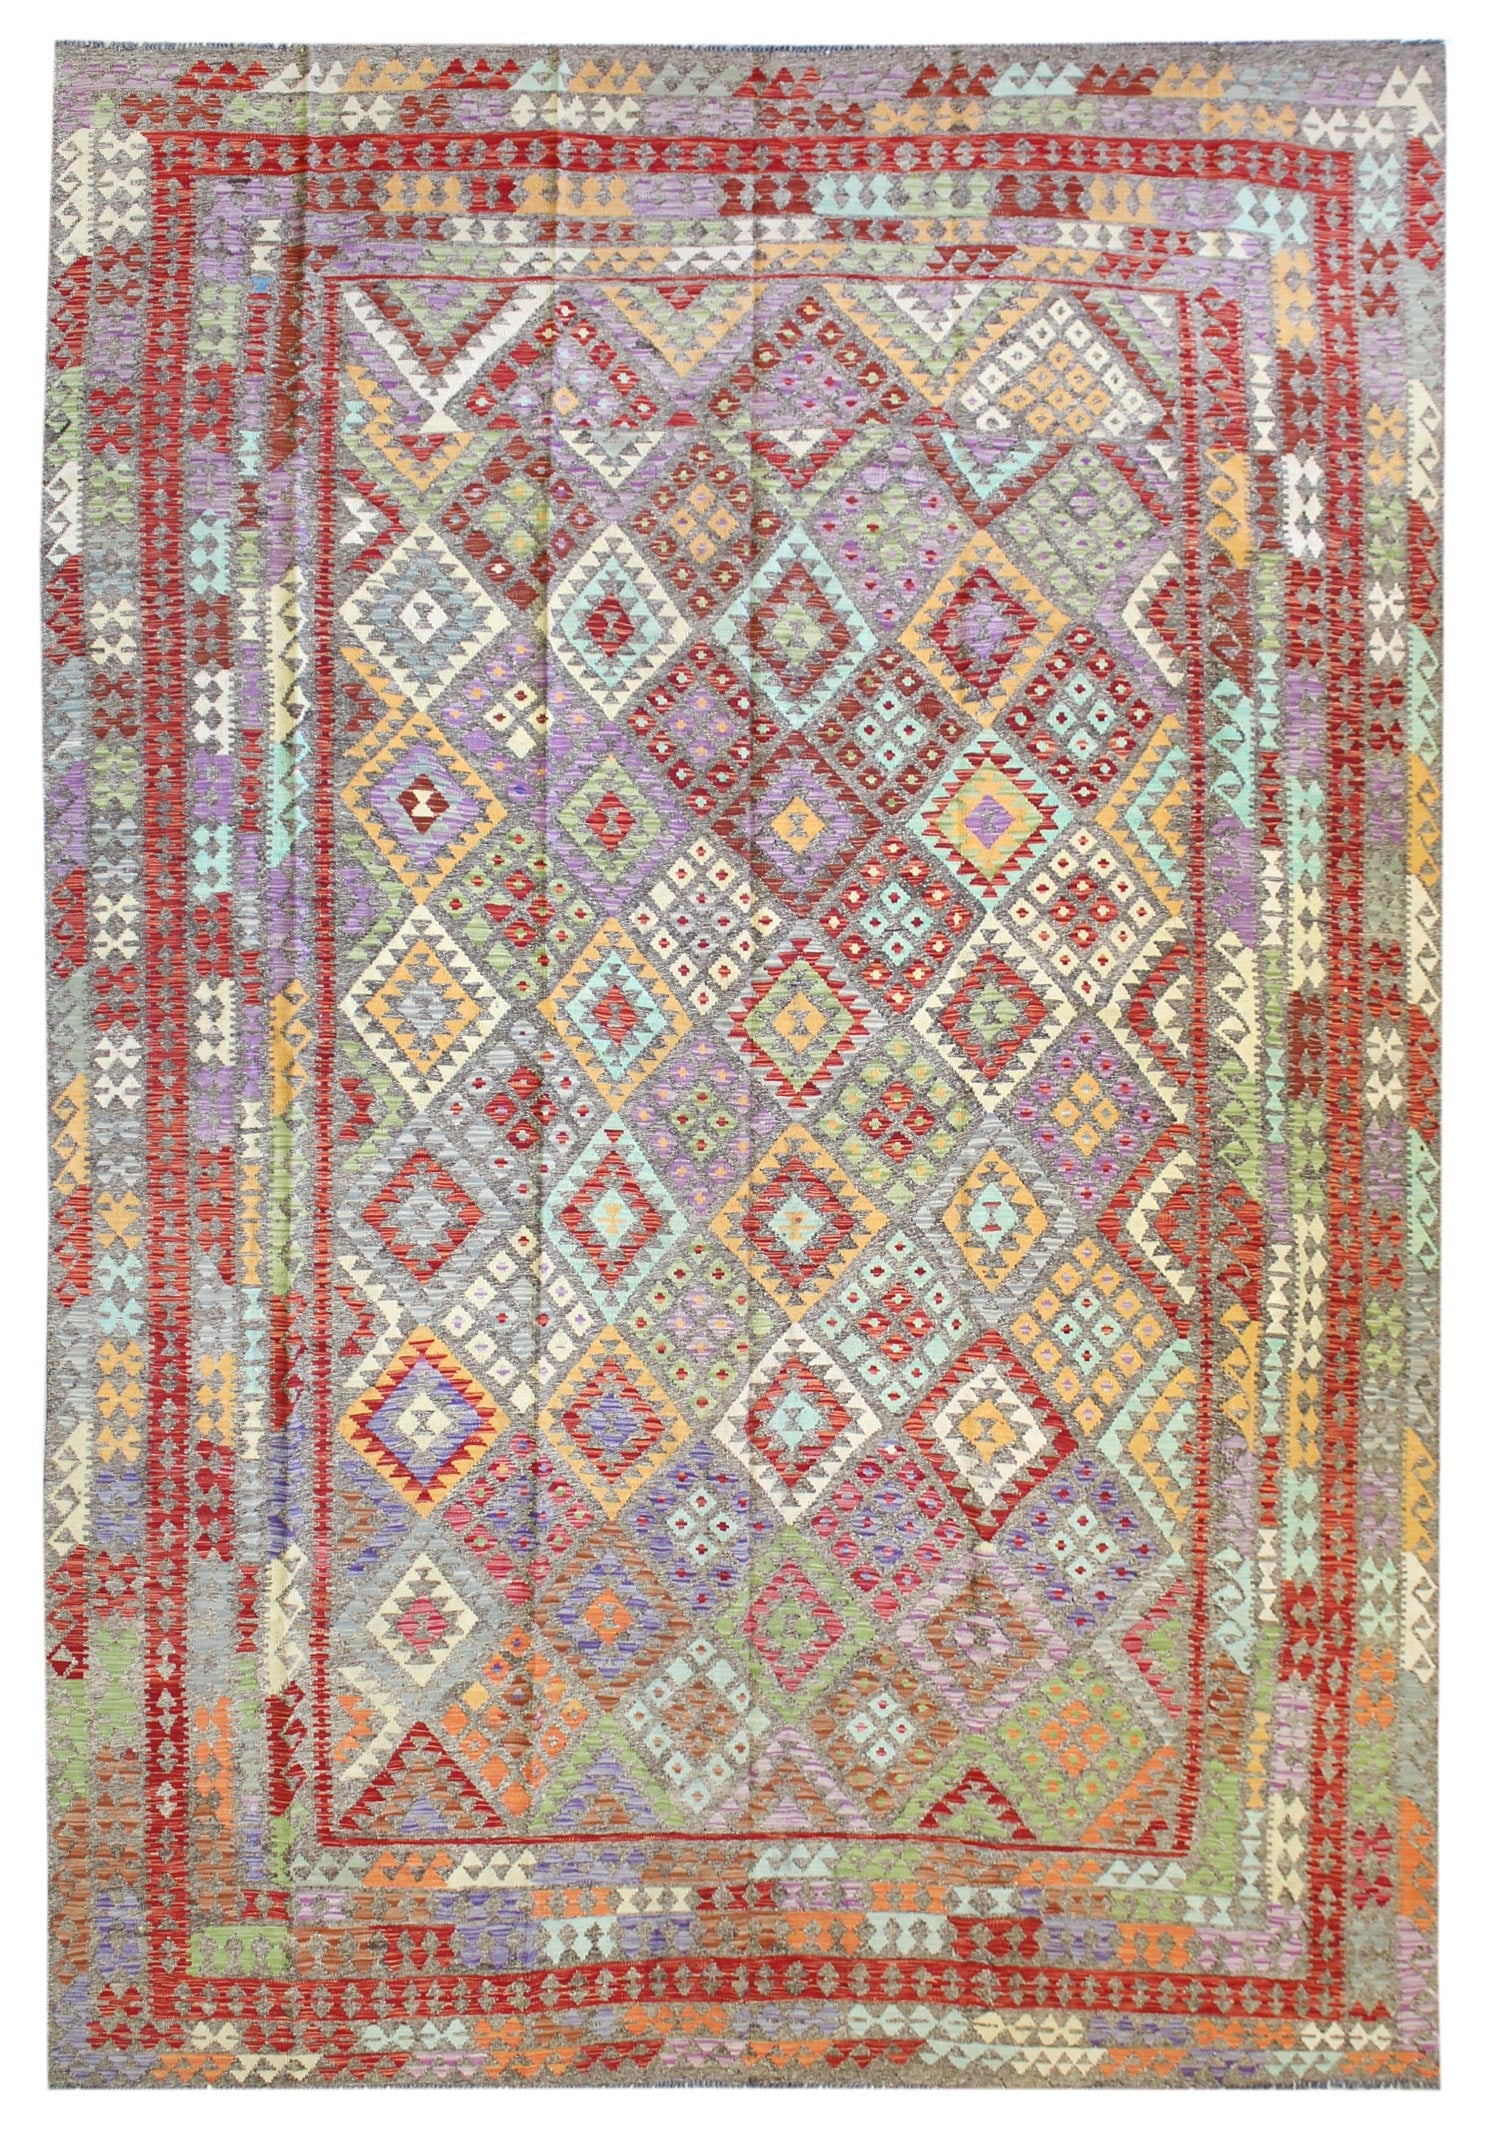 Uzbek Kilim Handwoven Tribal Rug